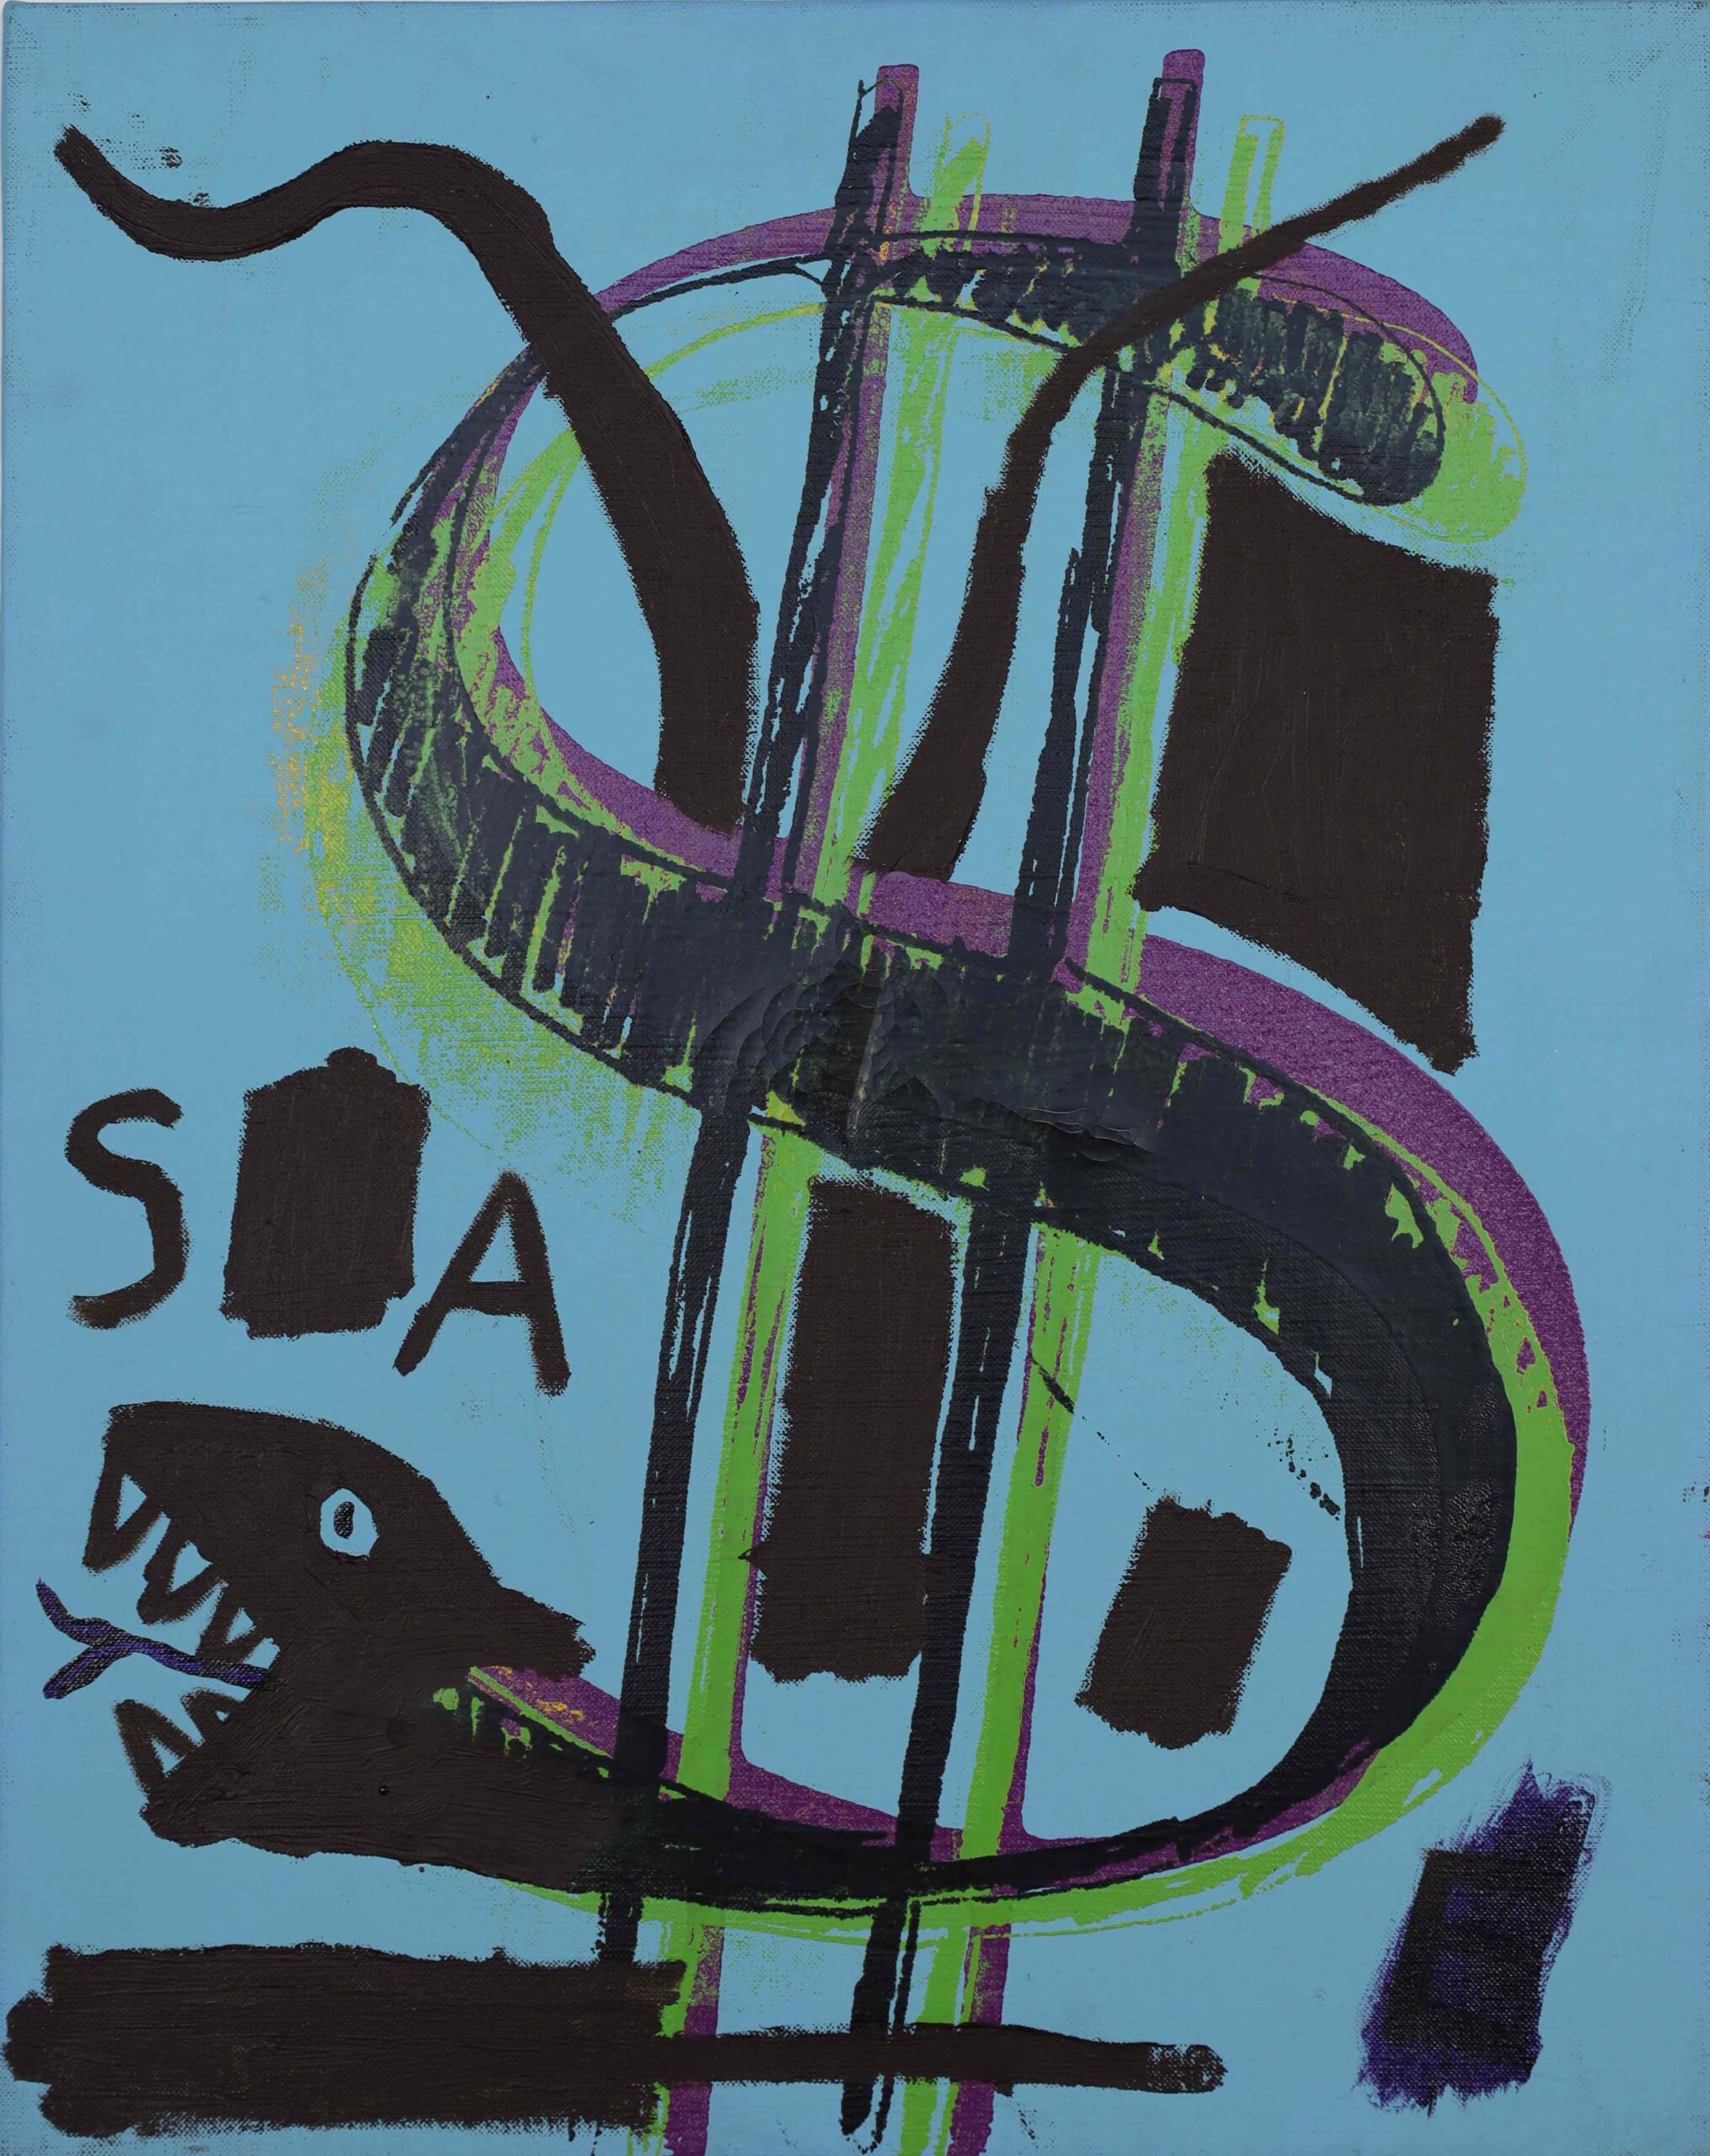 Basquiat x Warhol. Painting 4 Hands' Paris exhibition